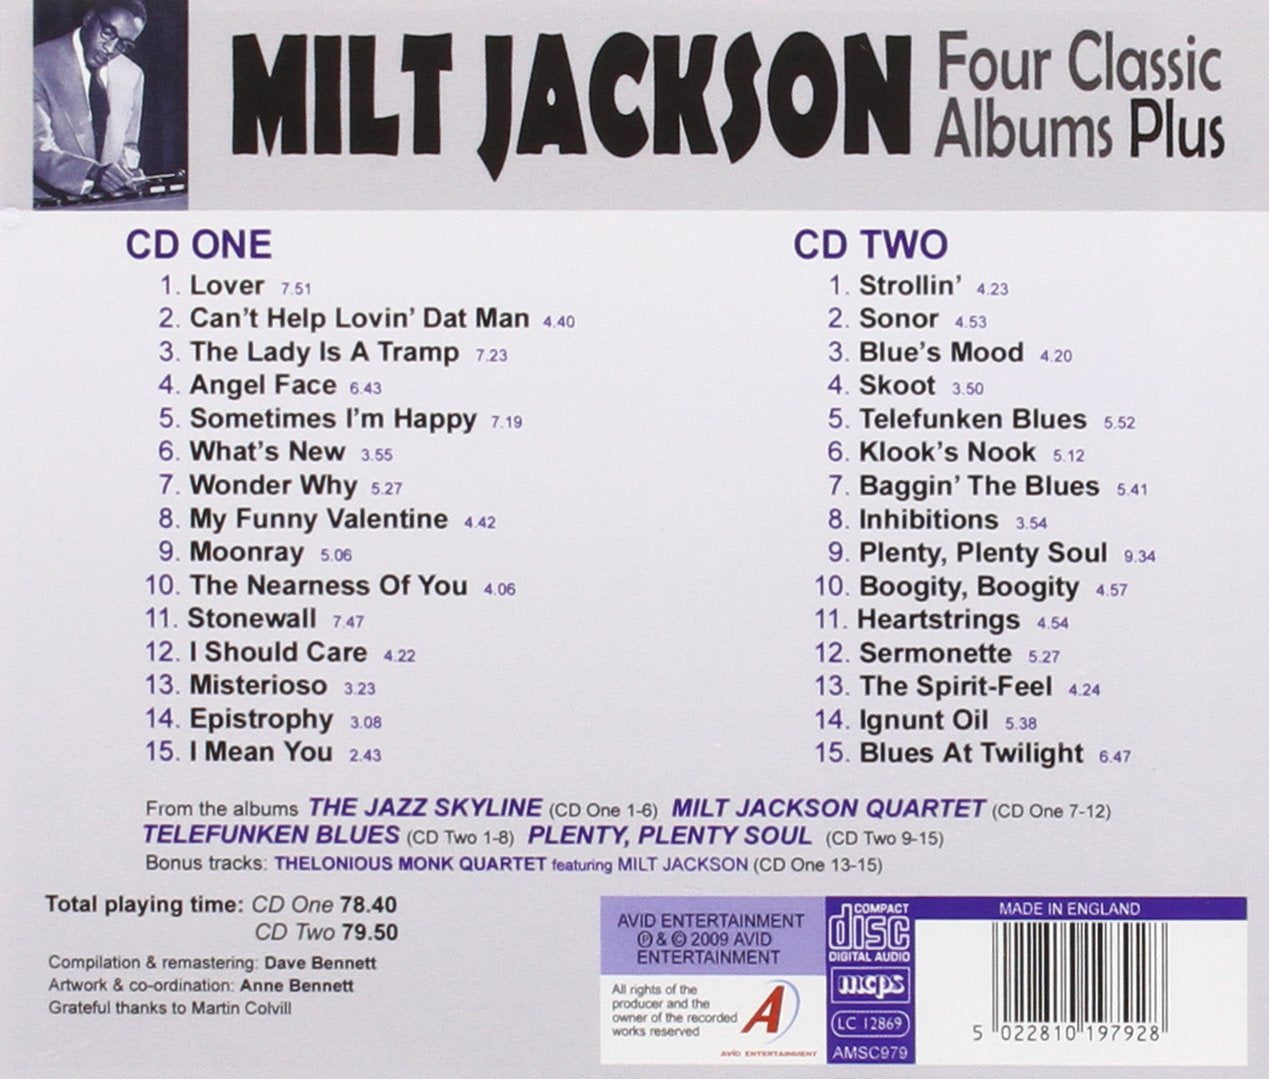 MILT JACKSON - Four Classic Albums Plus (The Jazz Skyline / Milt Jackson Quartet / Telefunken Blues / Plenty Plenty Soul)